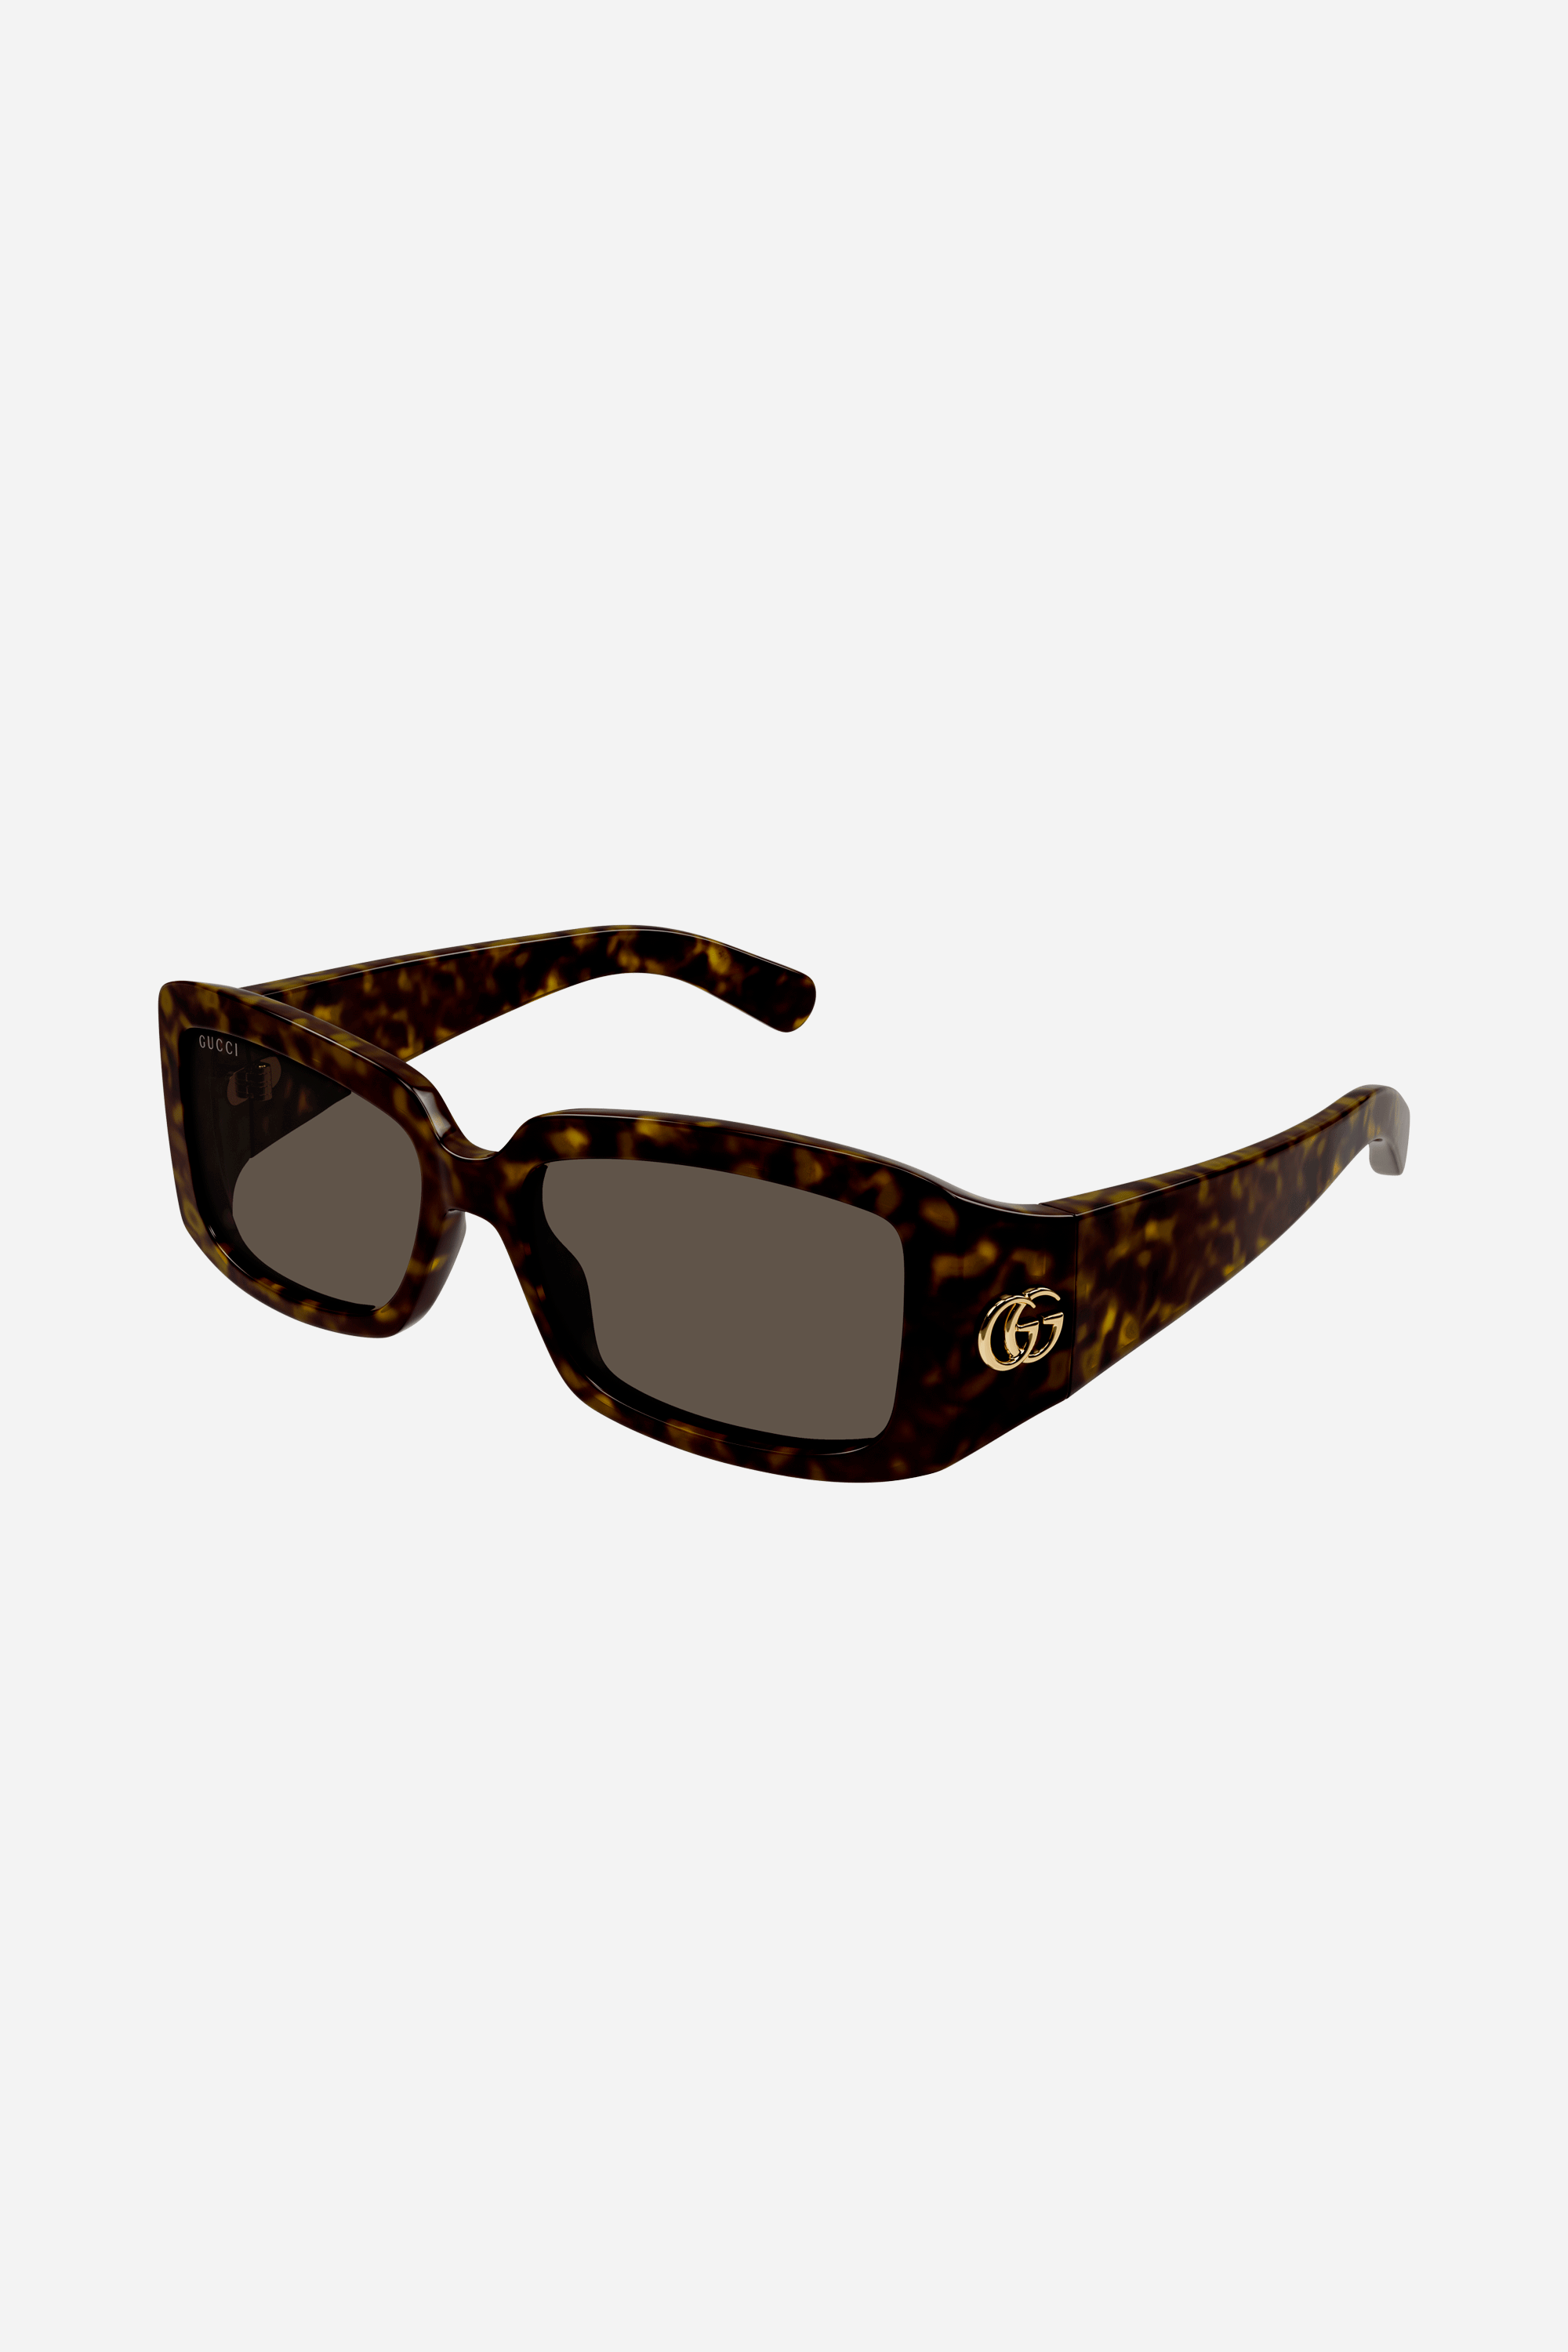 Gucci wrap around small havana sunglasses - Eyewear Club